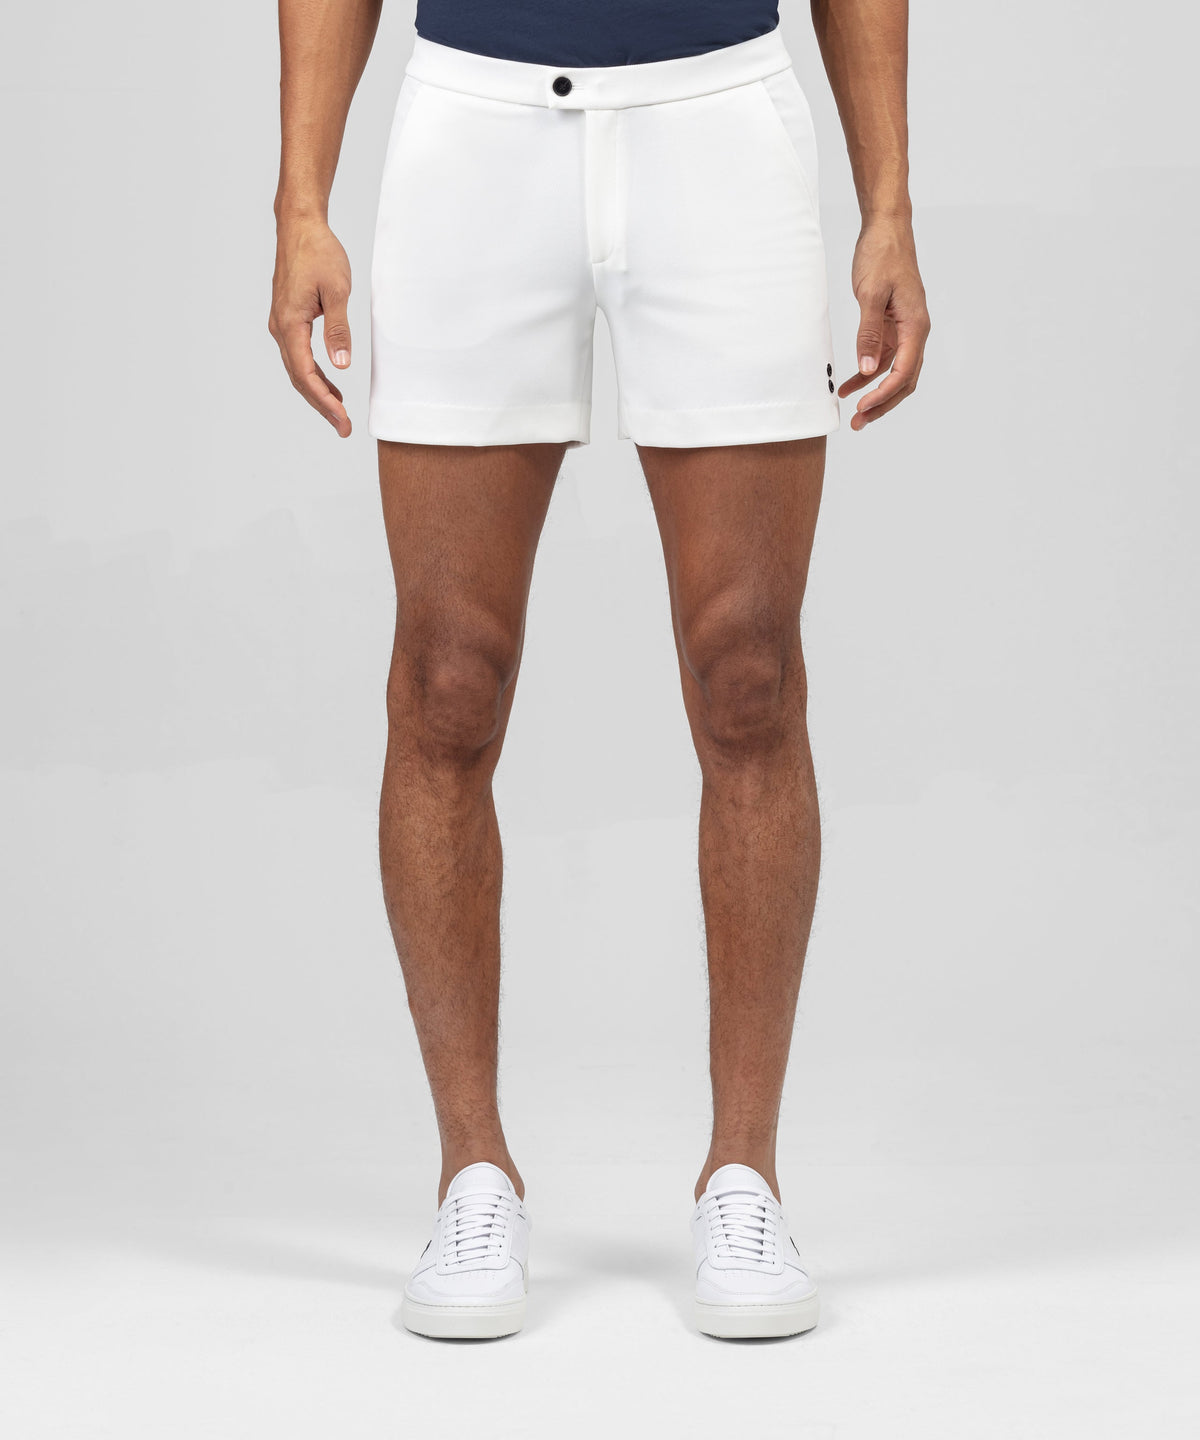 Tennis Shorts: White